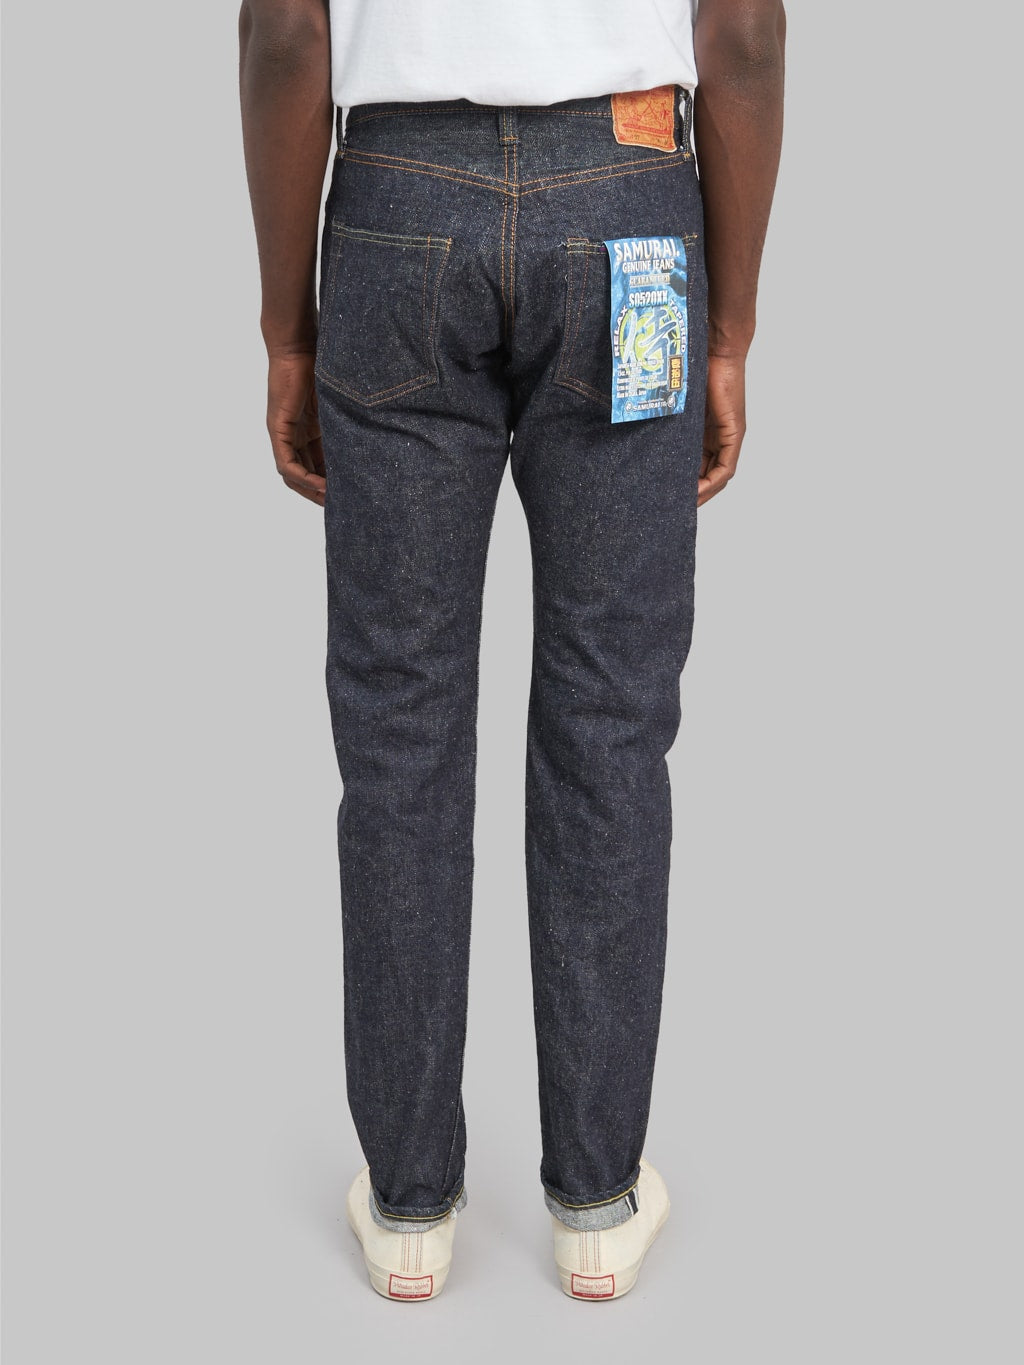 samurai jeans s0520xx otokogi 15oz relaxed tapered jeans back rise